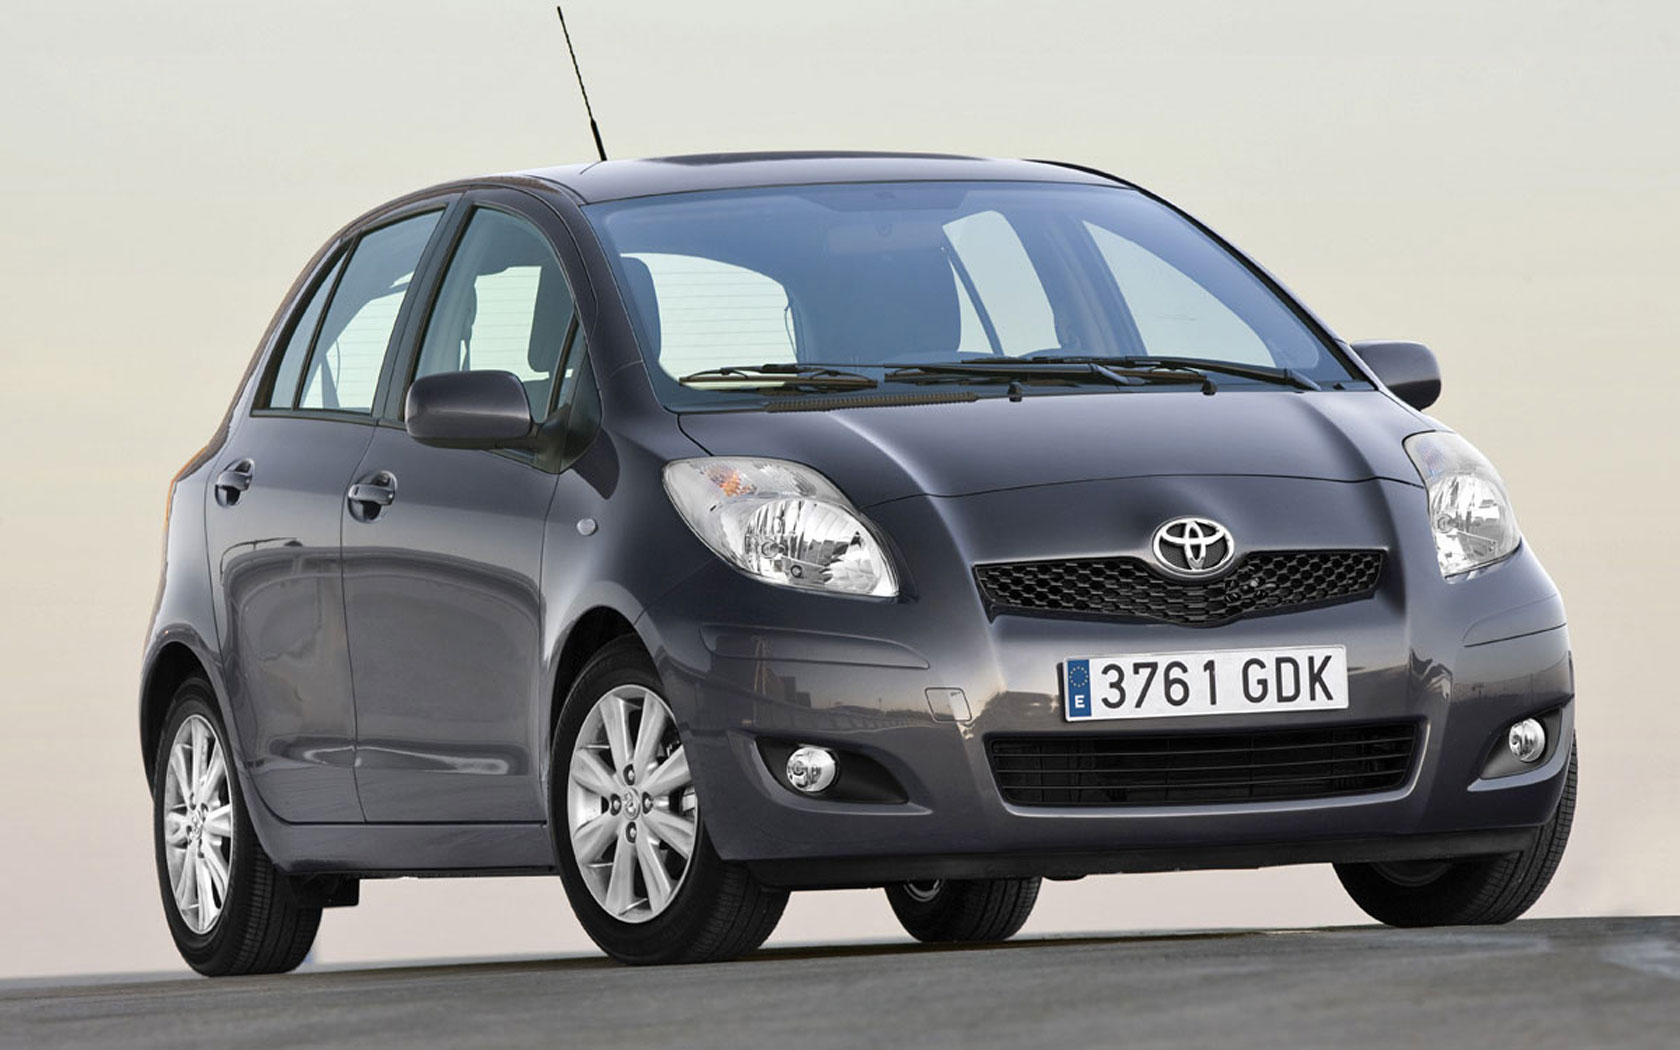  Toyota Yaris (2009-2011)